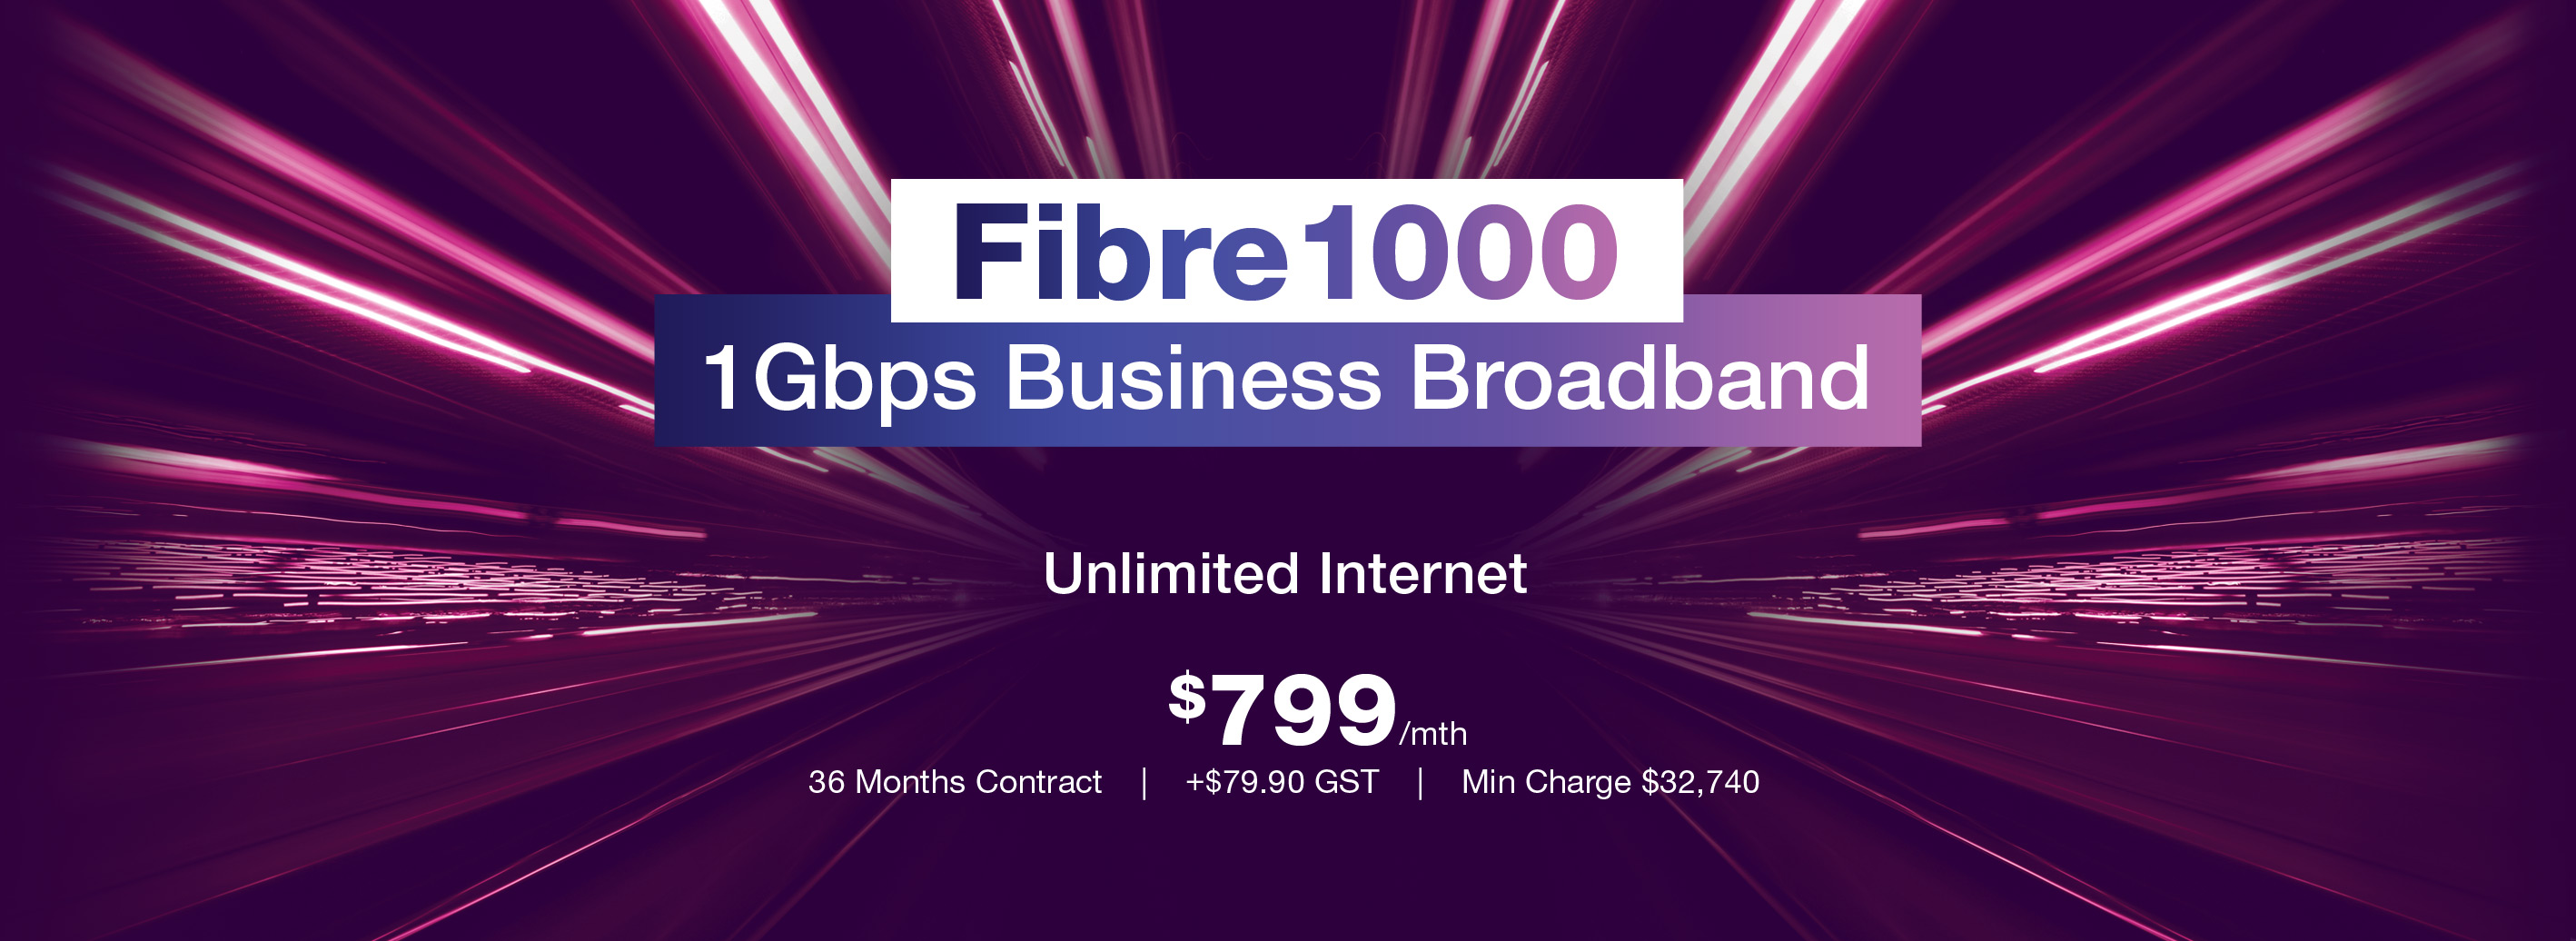 Fibre1000 - 1Gbps Business Broadband